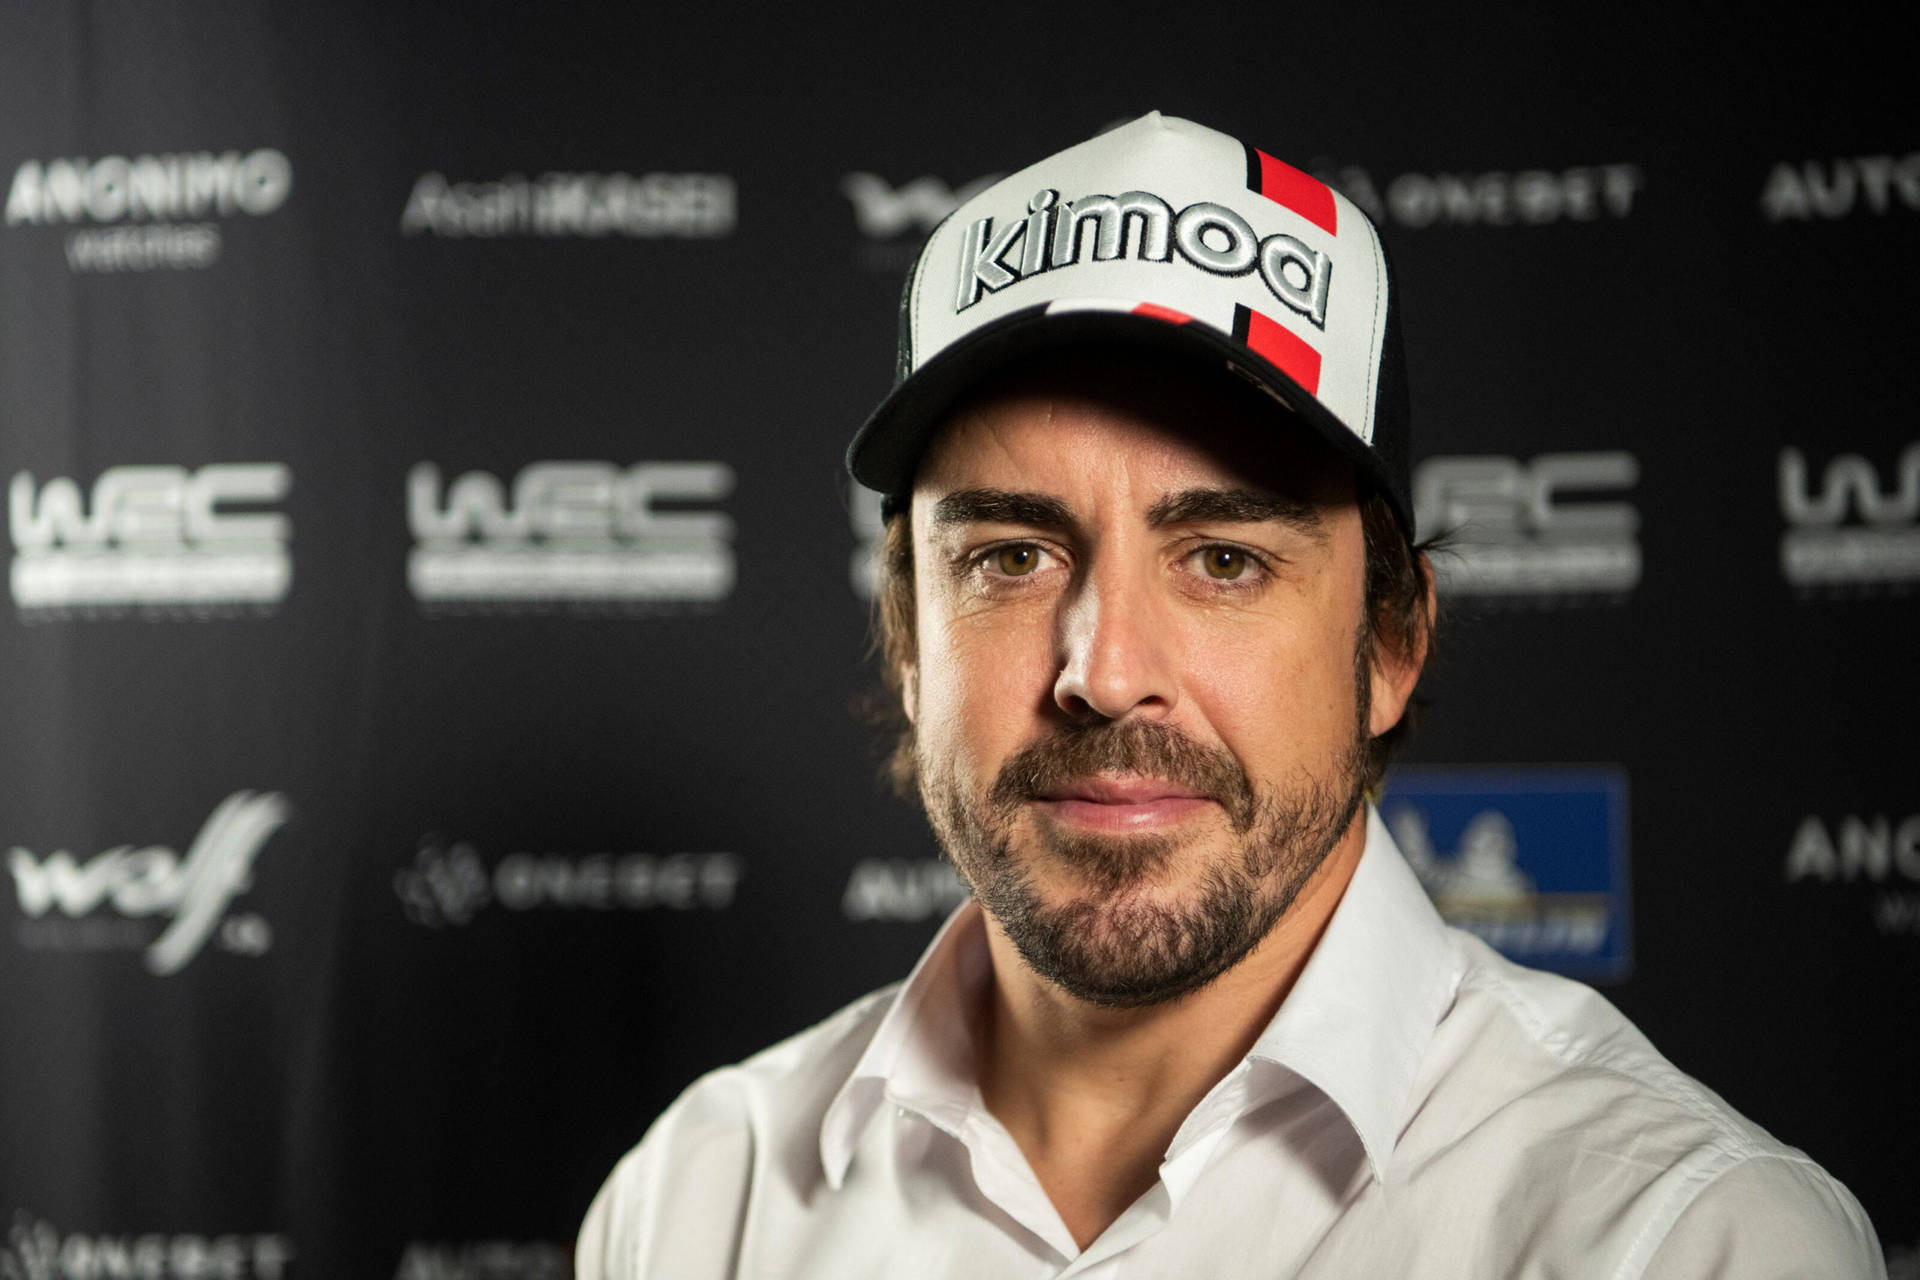 Fernando Alonso Bilder